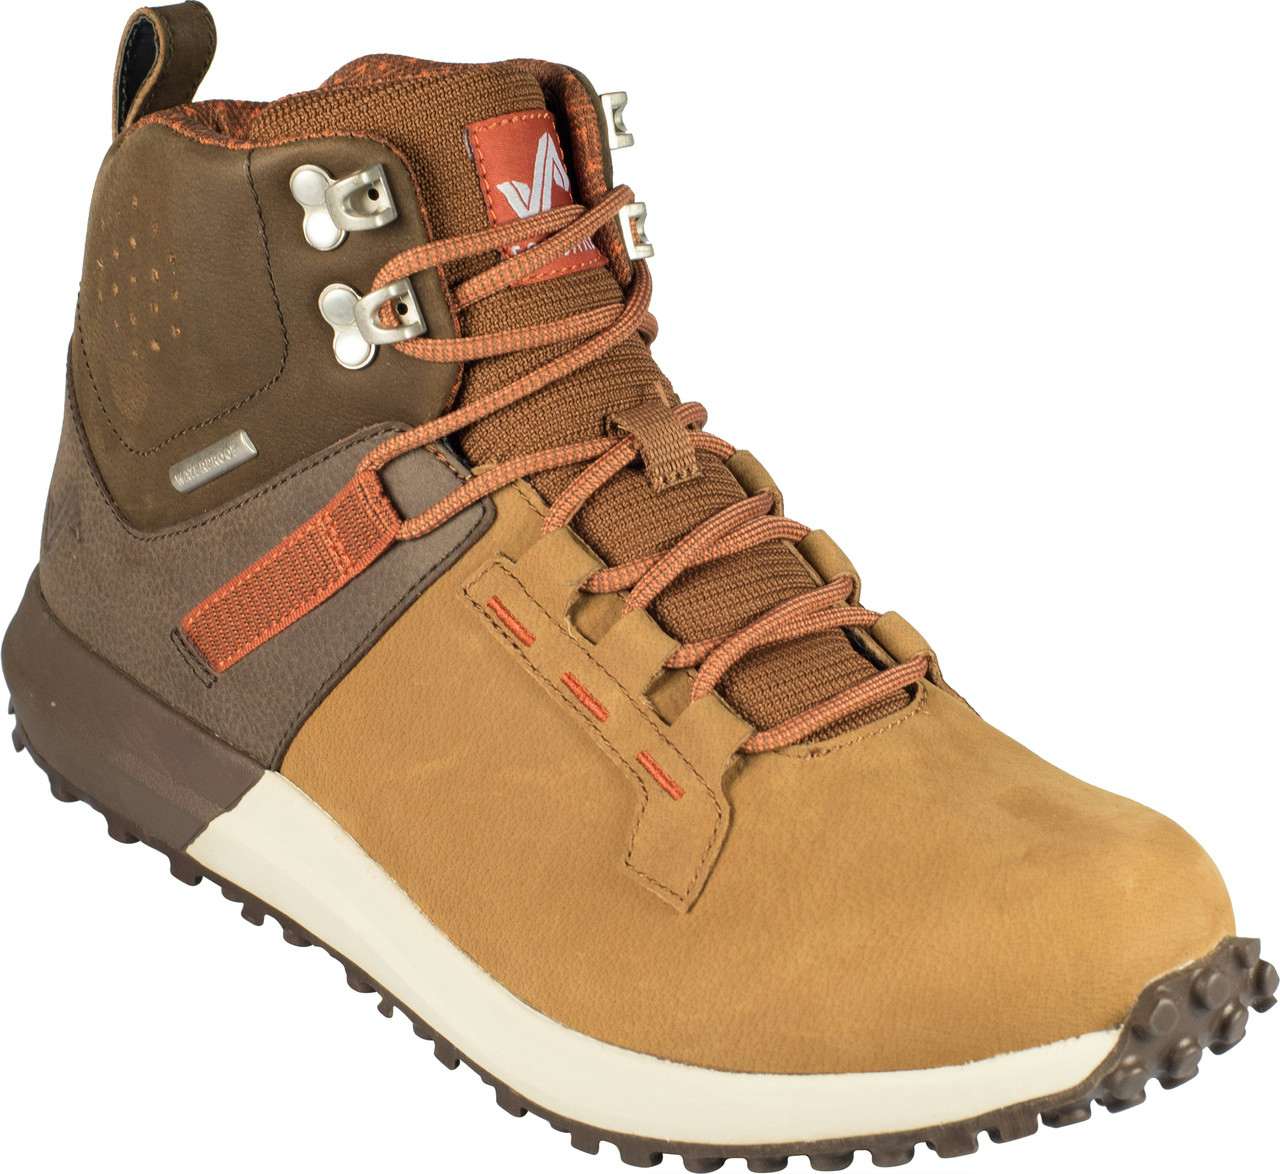 Range High Waterproof Light Hiking Boots Brown/Tan